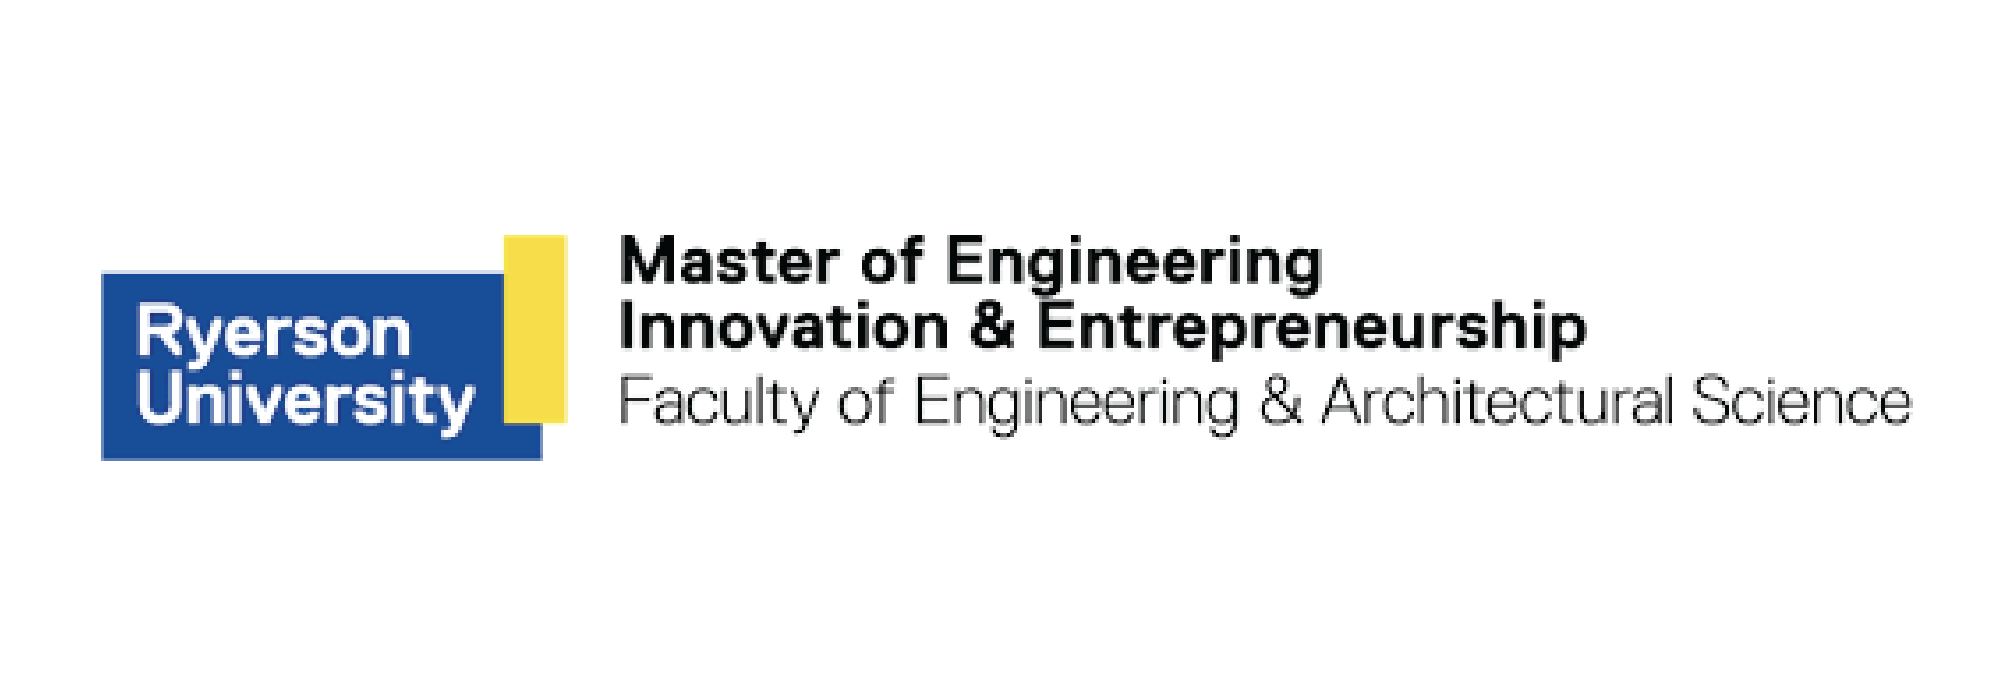 Master of Engineering Innovation & Entrepreneurship Program